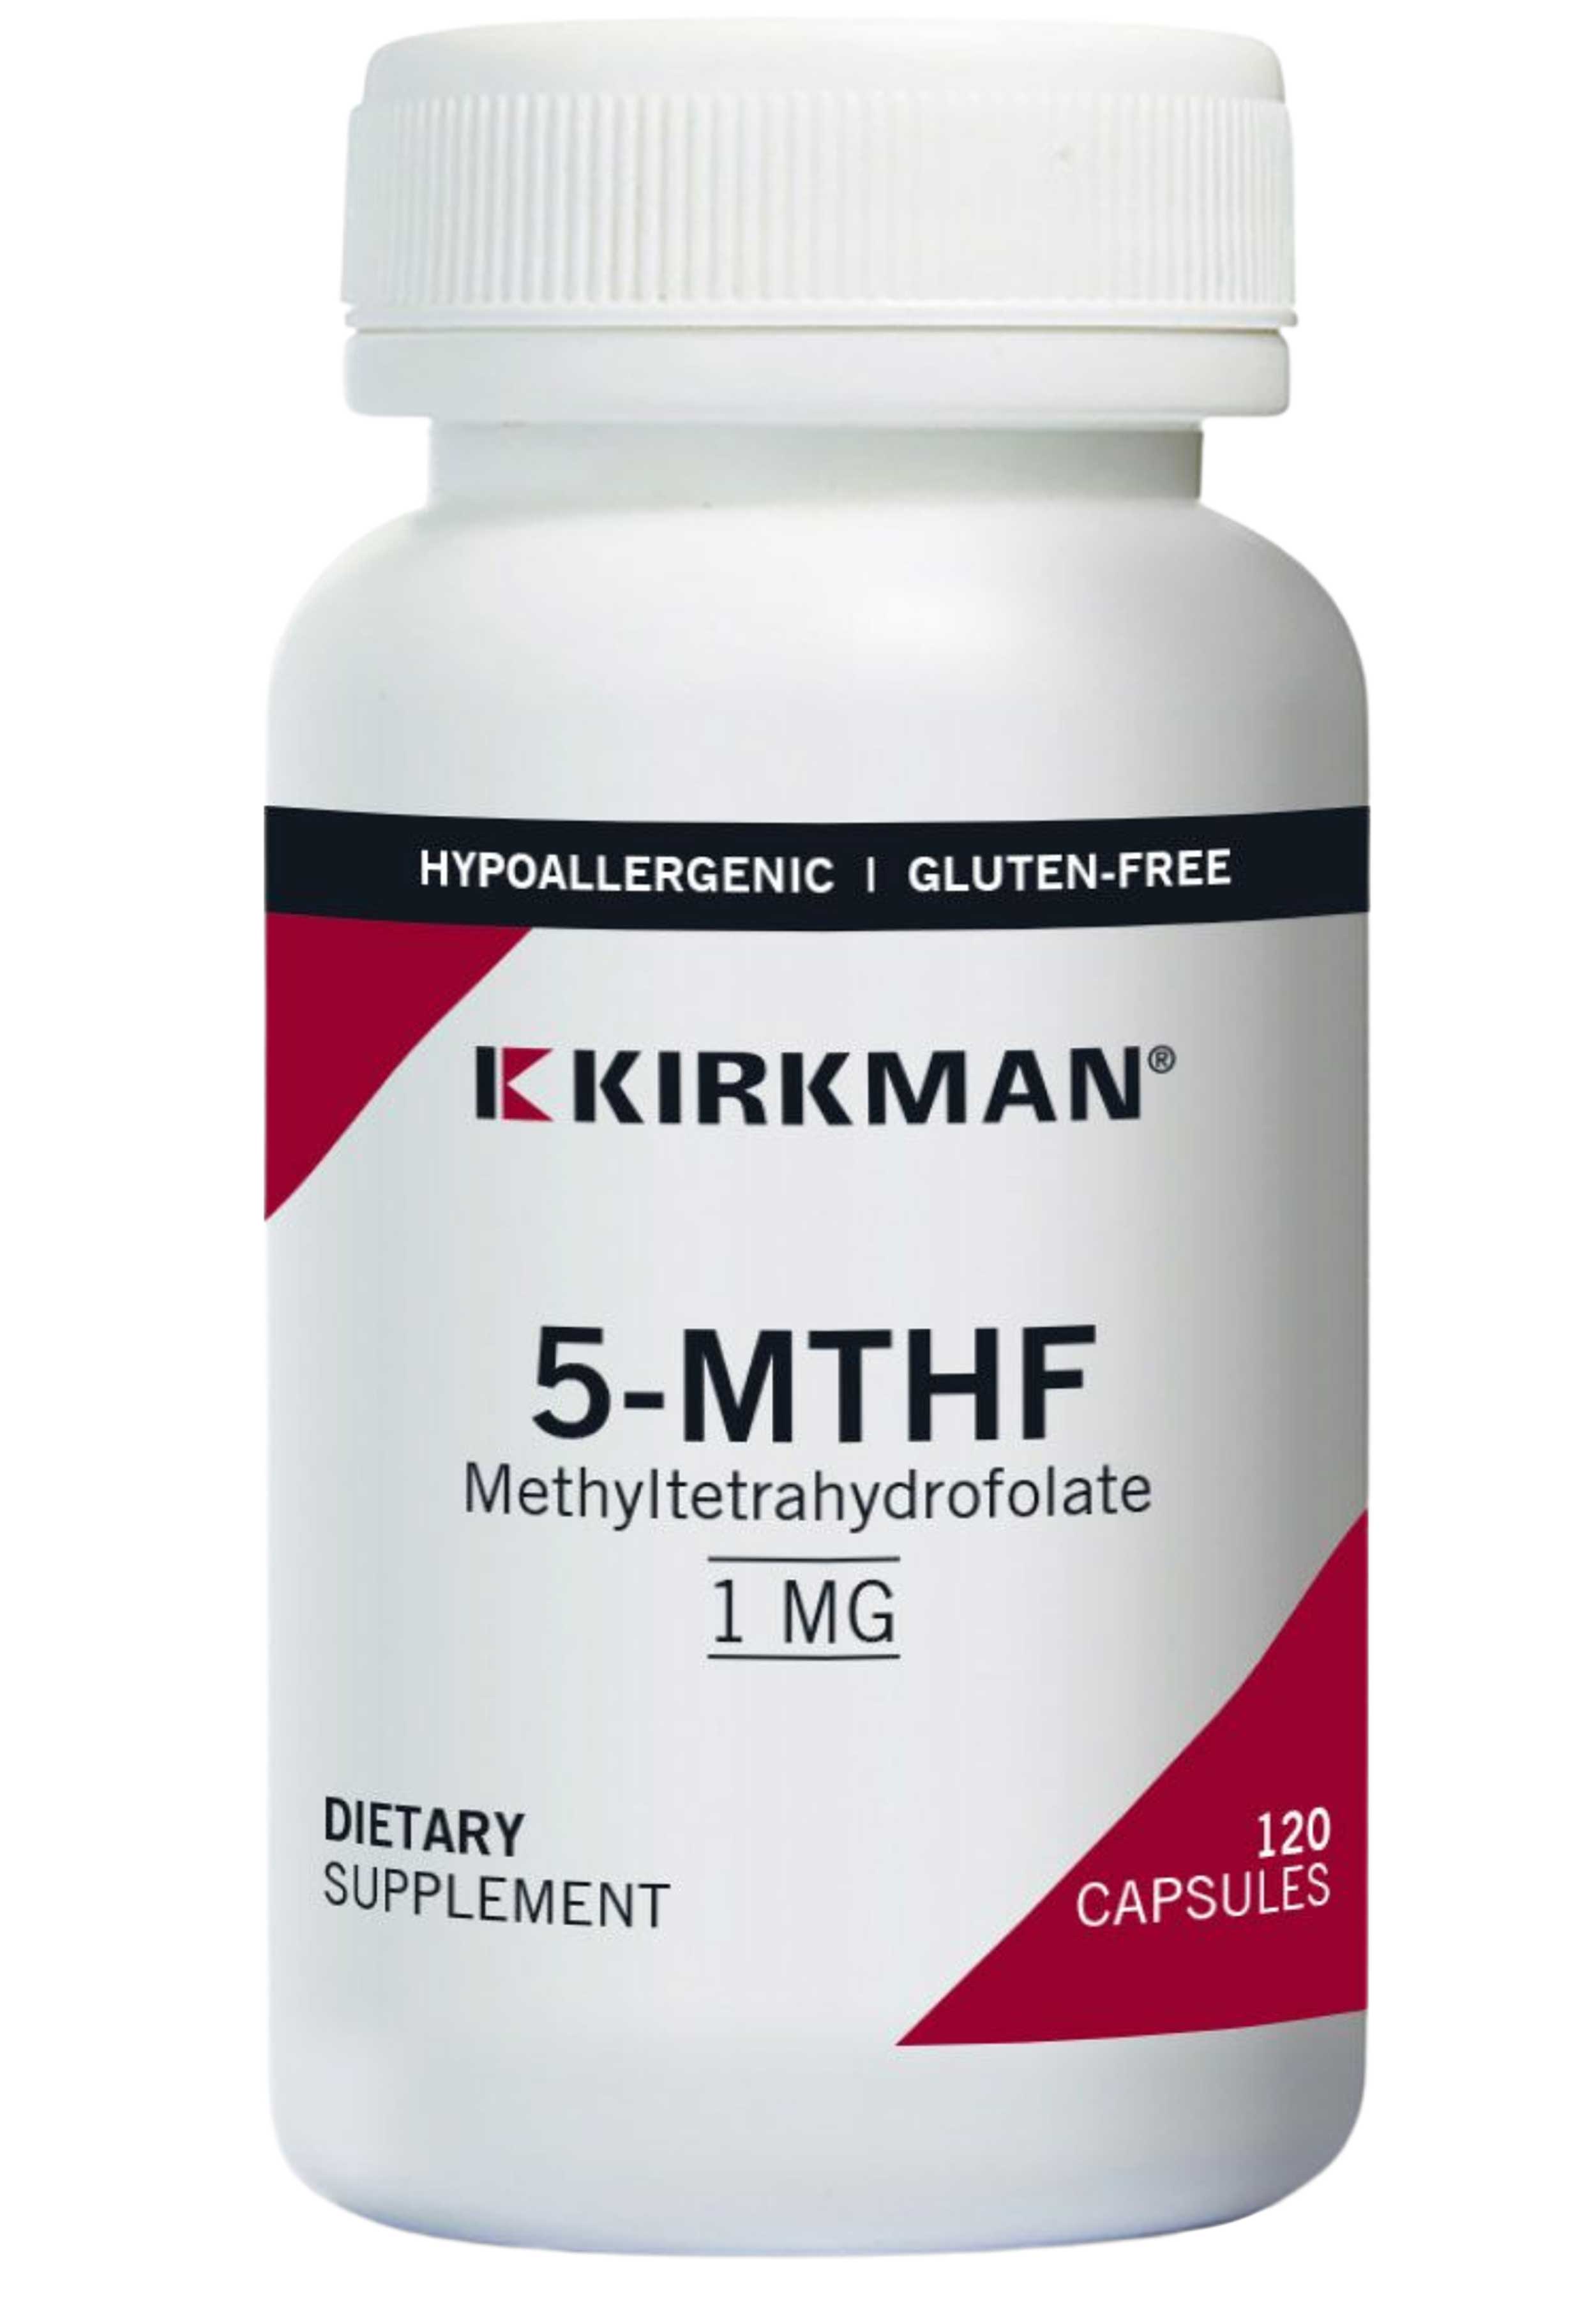 Kirkman 5-MTHF Methyltetrahydrofolate 1 mg